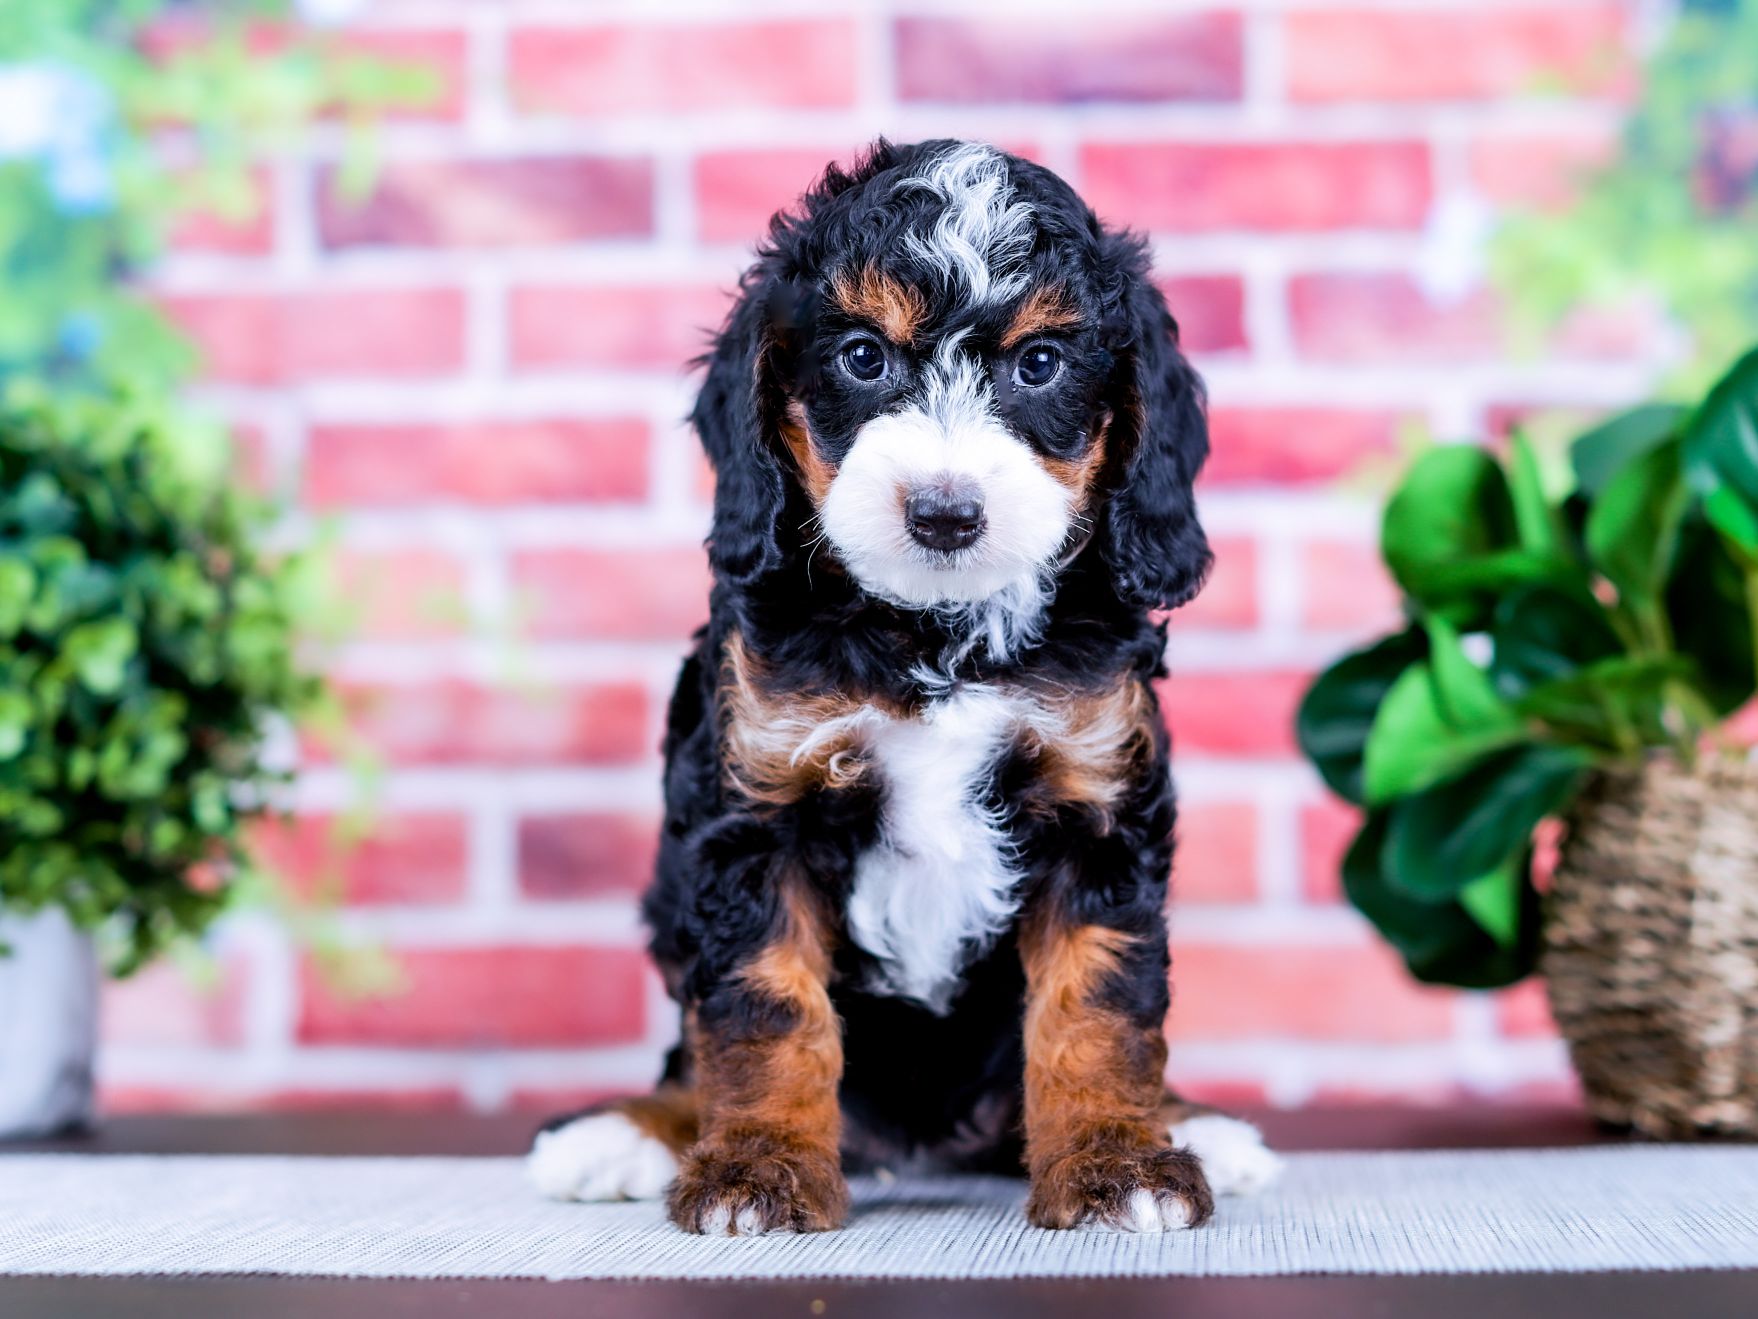 Rosetta the puppy